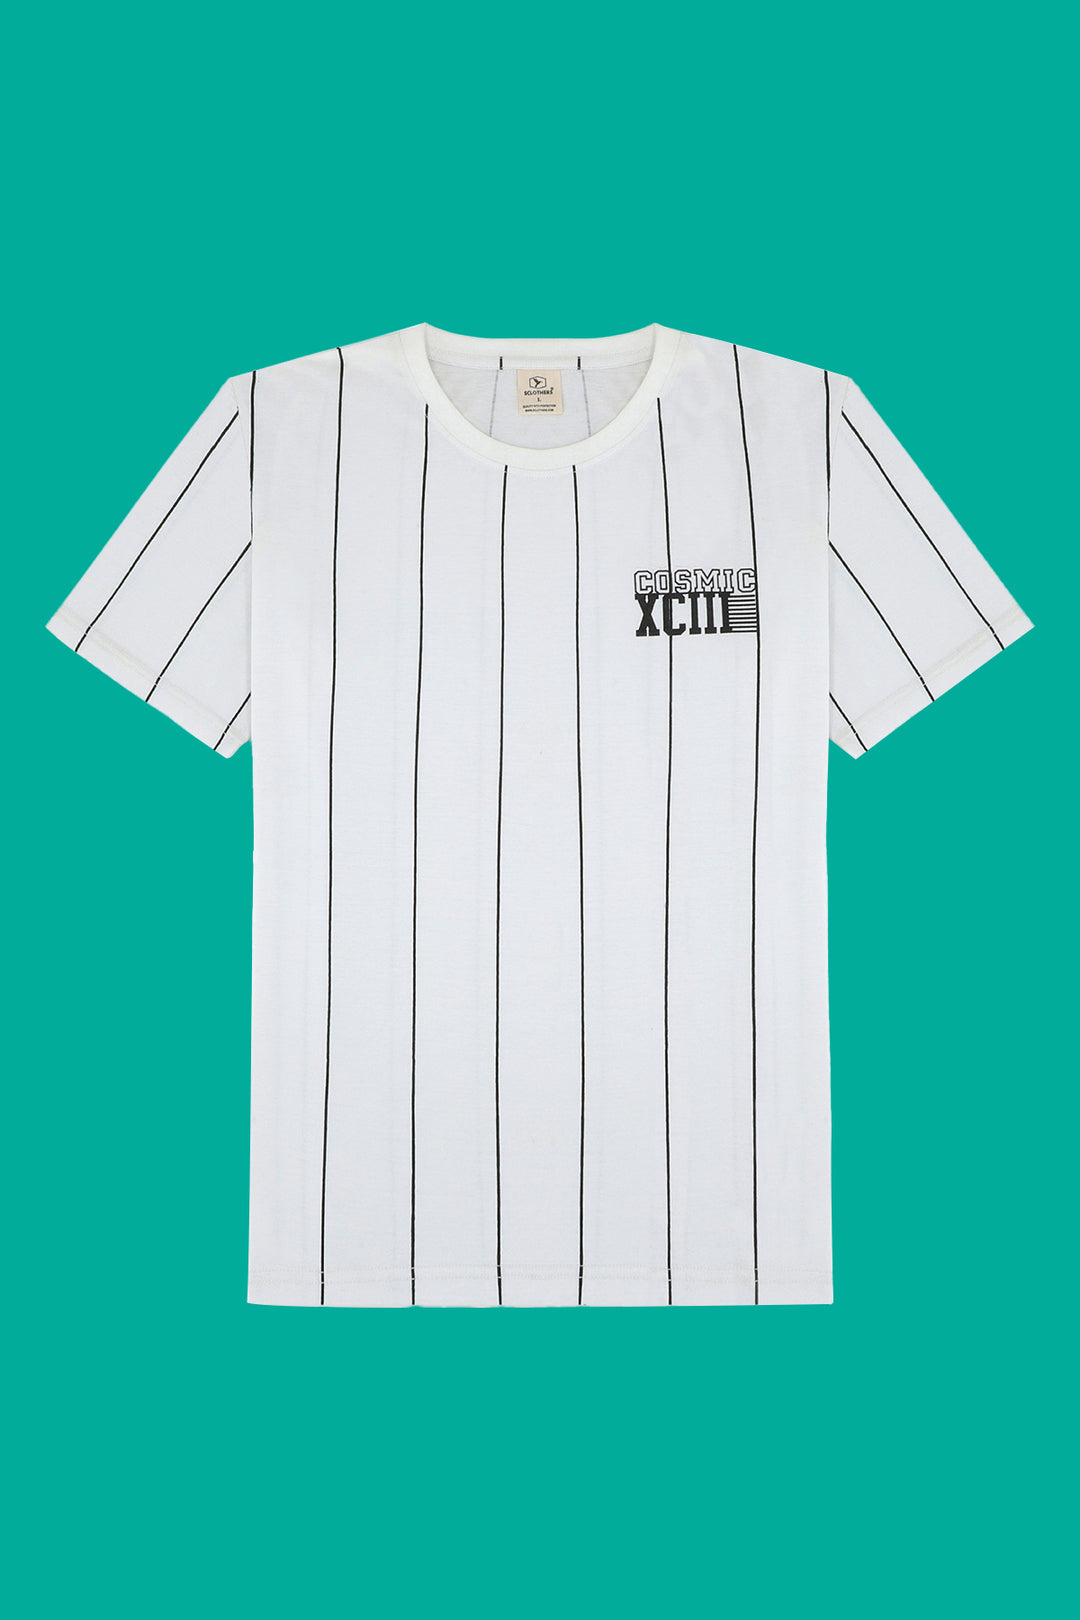 White Cosmic Printed T-Shirt (Plus Size) - S23 - MT0314P